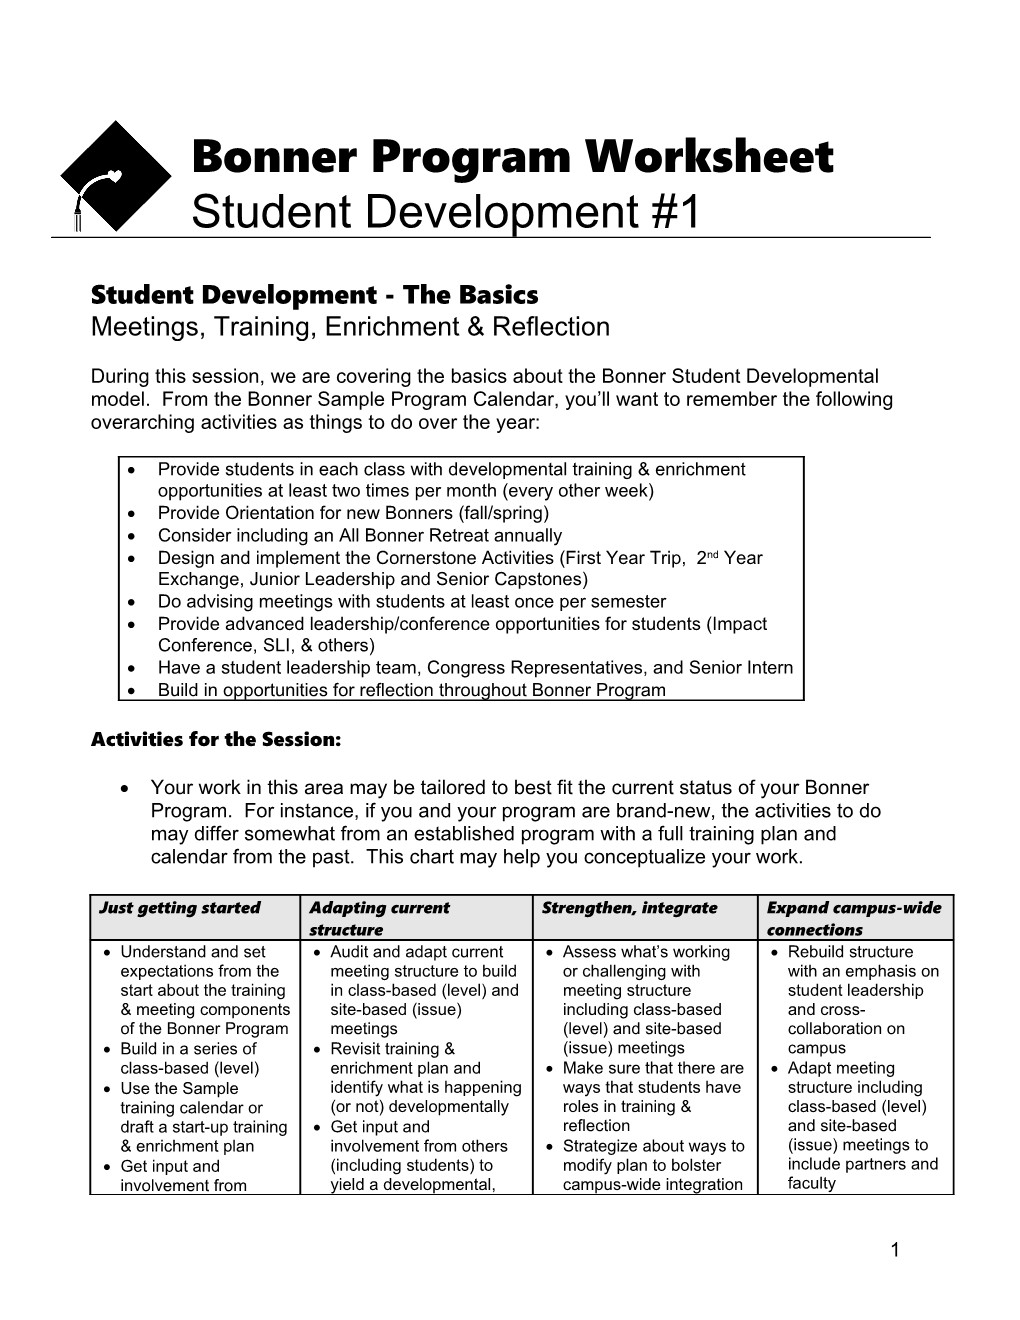 Student Development - the Basics